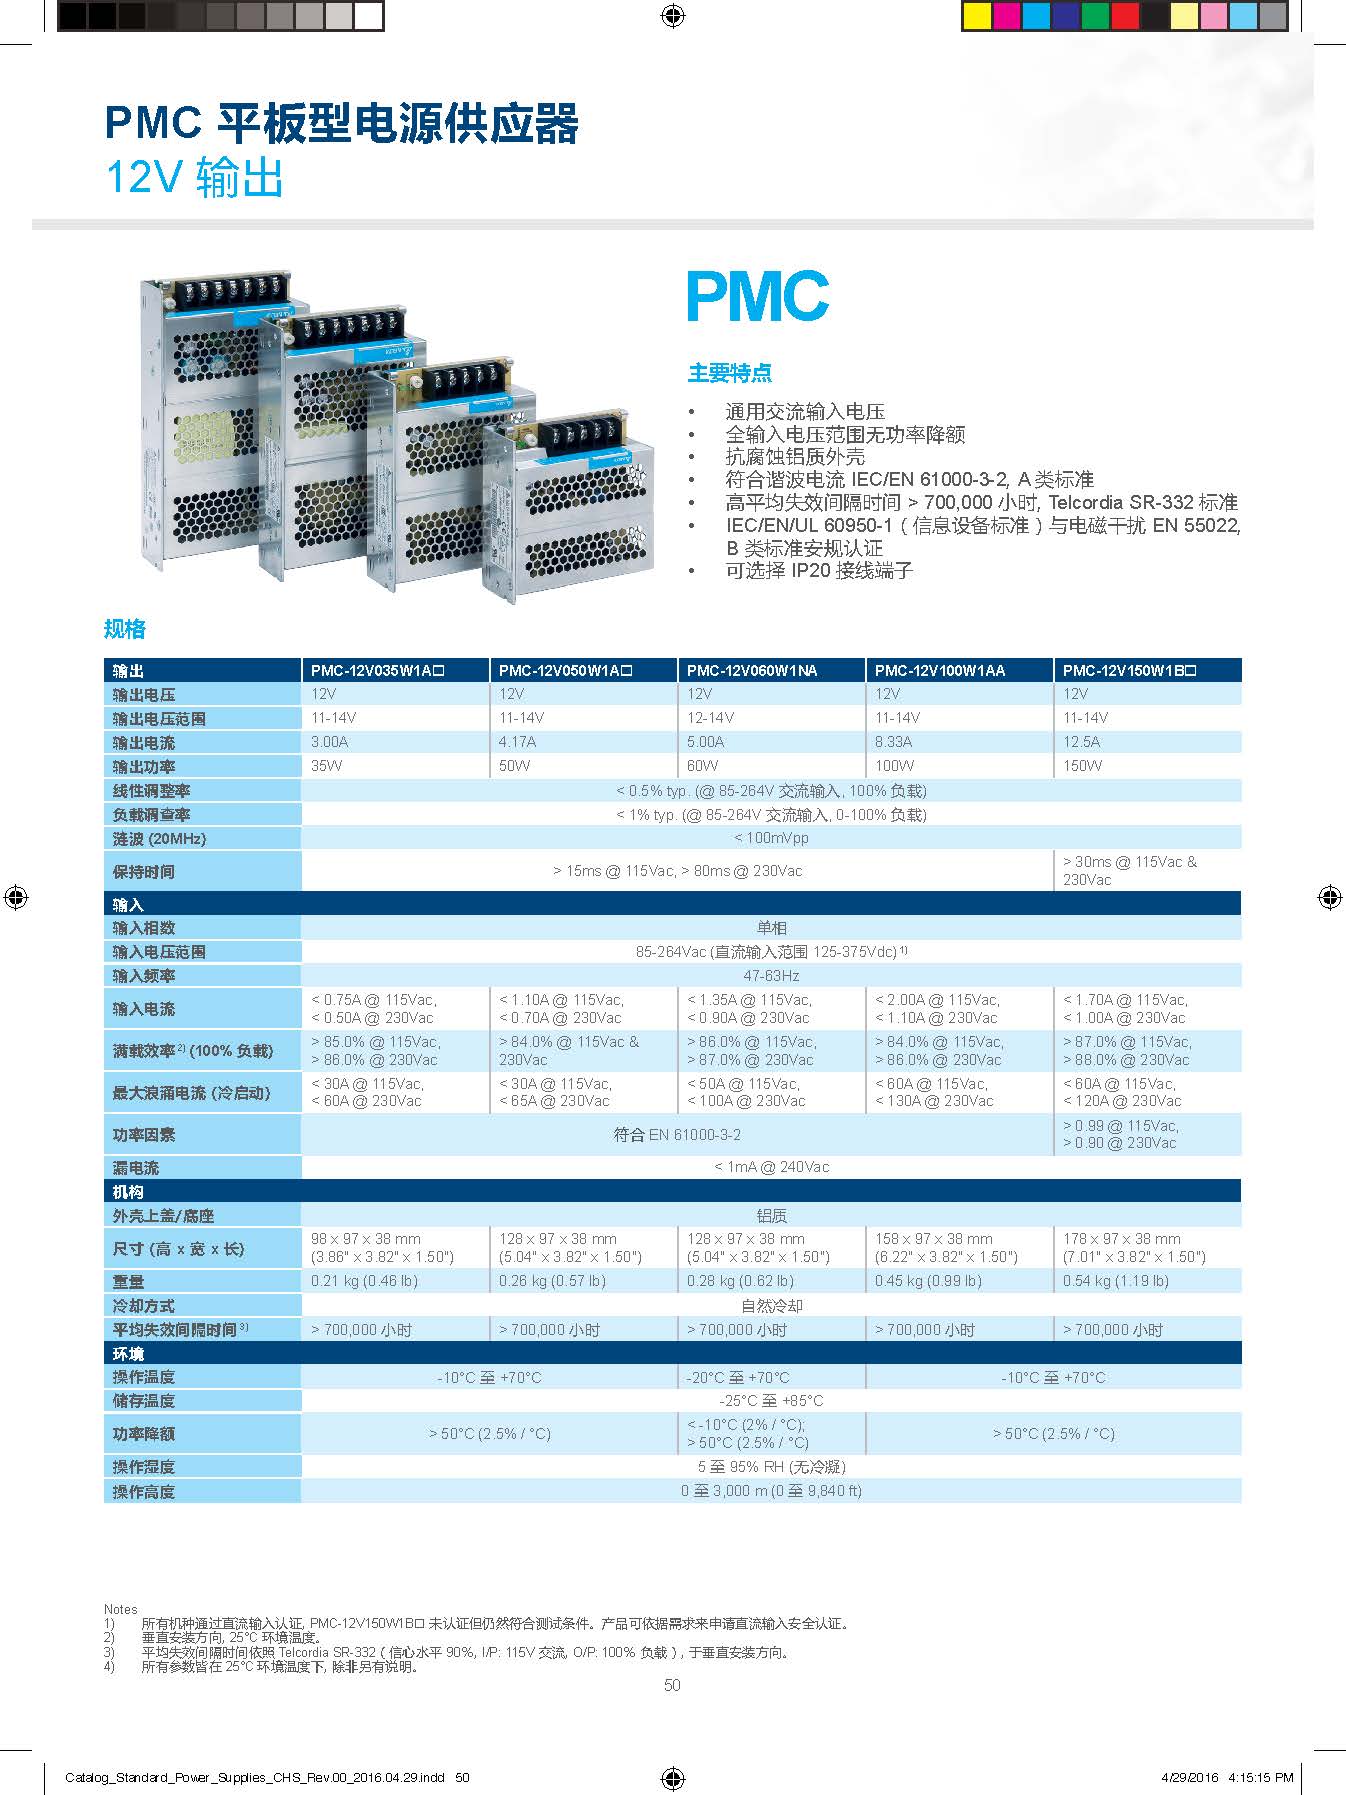  PMC-12V系列